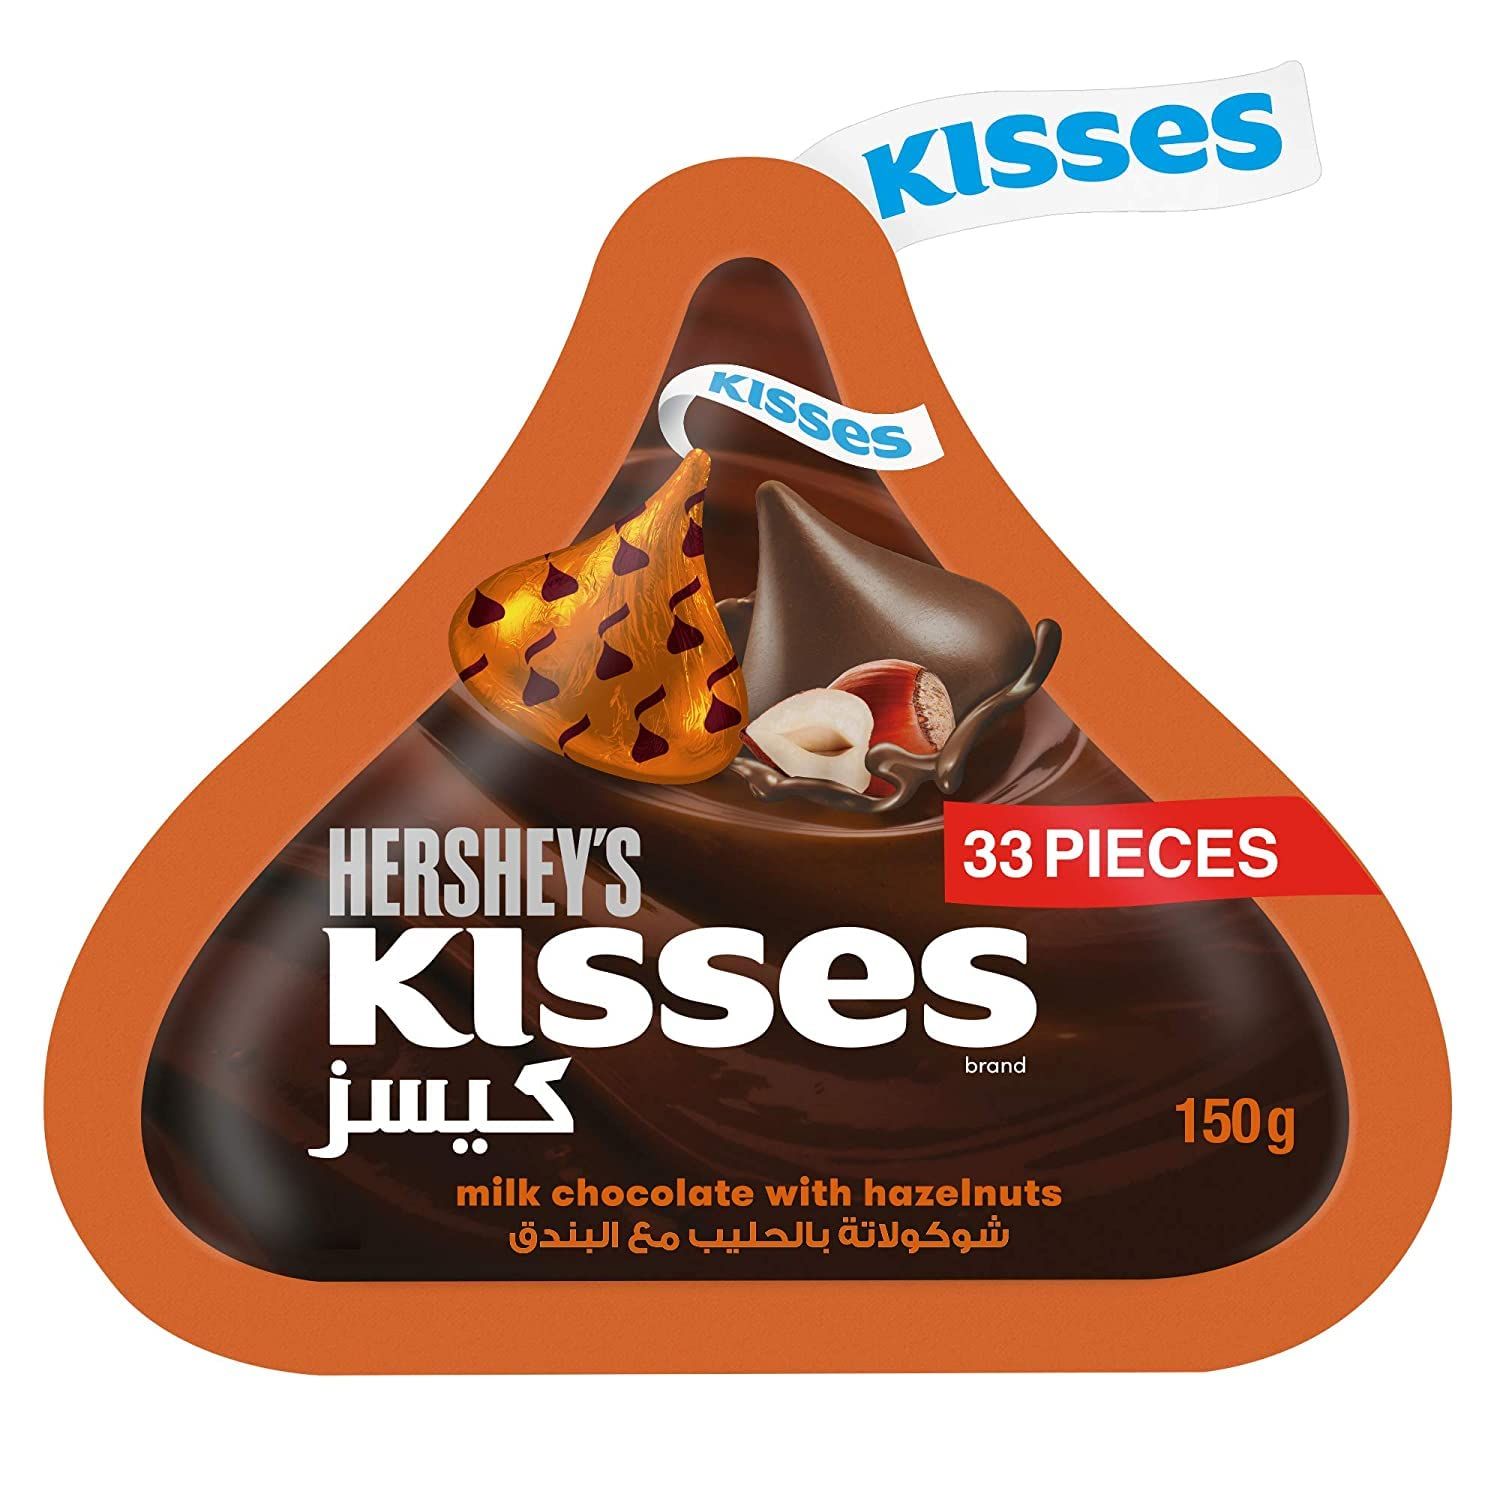 Hershey's Kisses Milk Chocolate With Hazelnuts Image